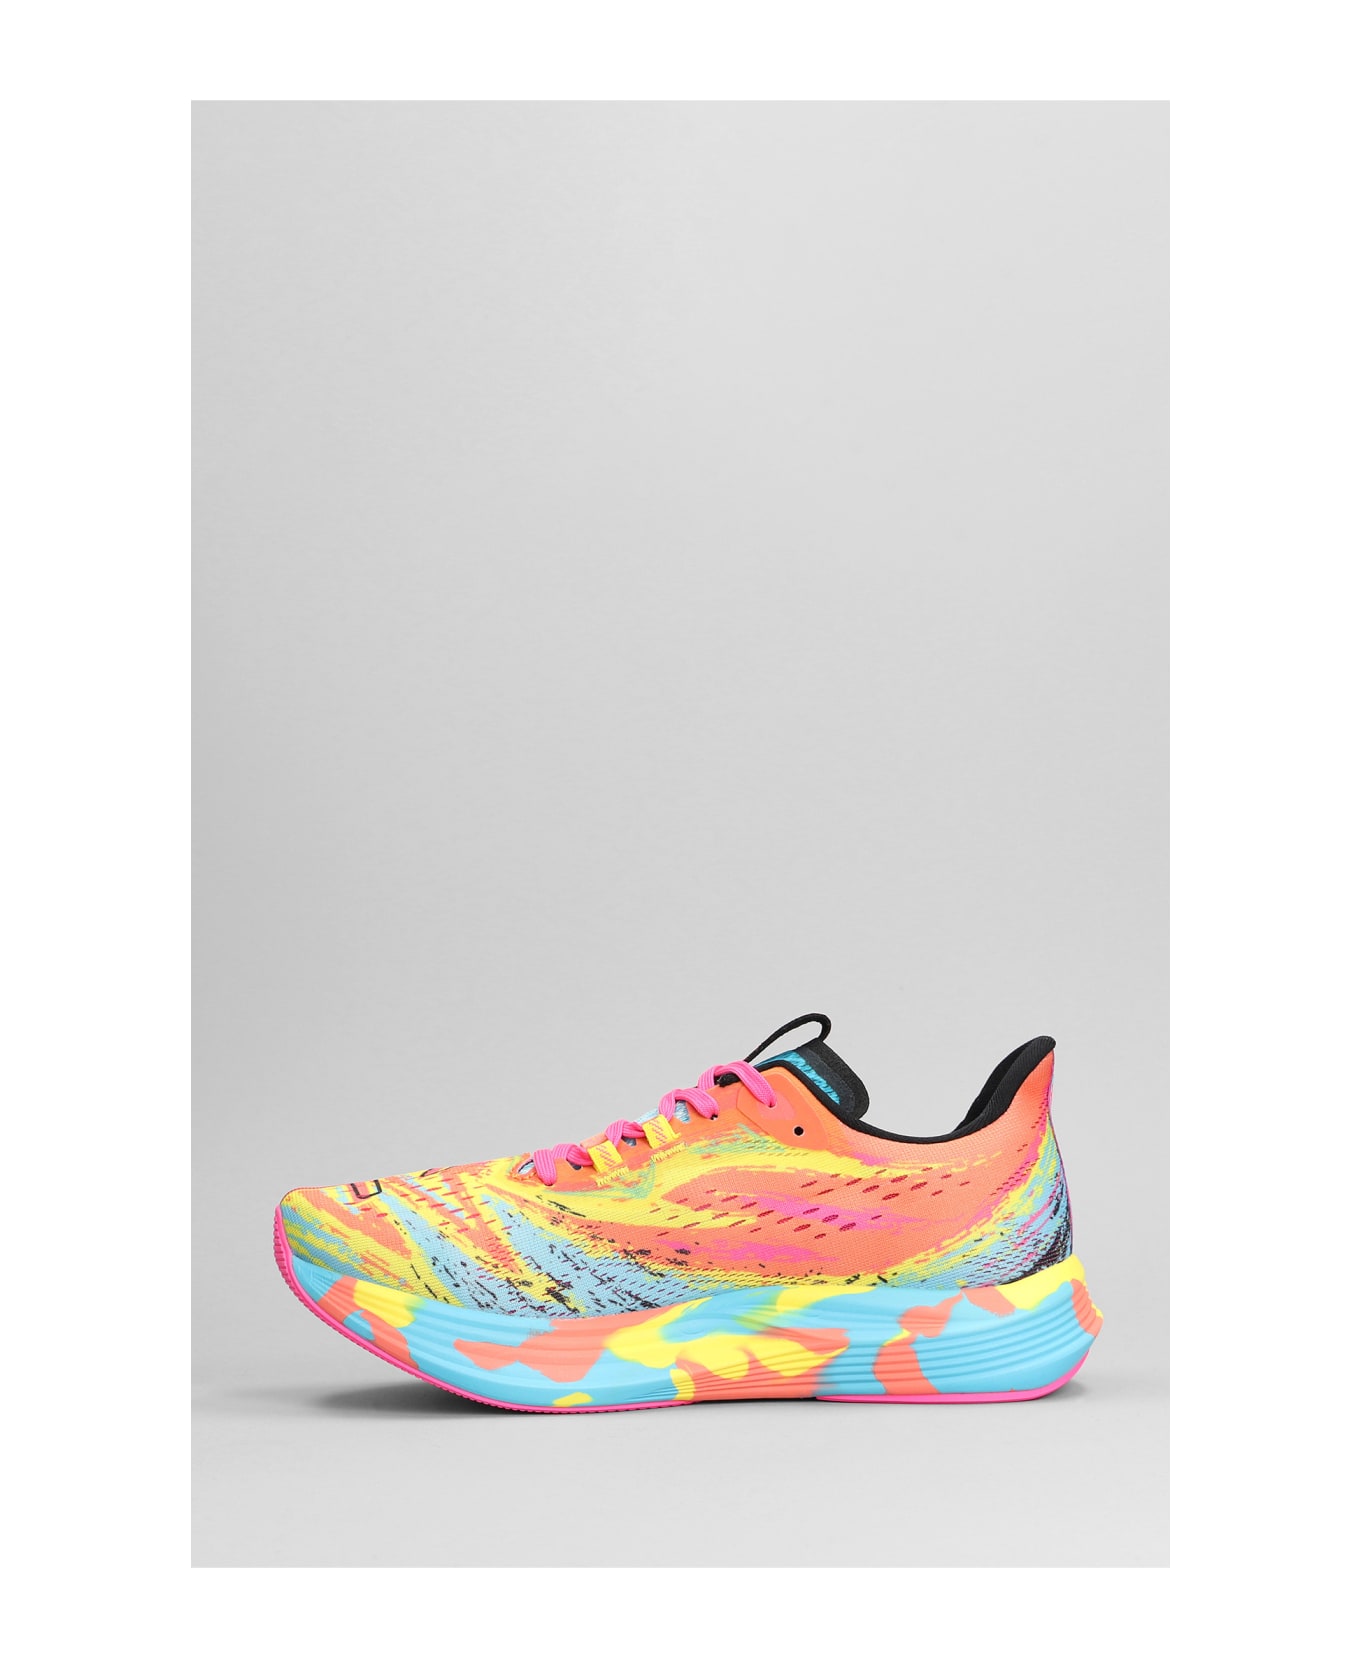 Asics Noosa Tri 15 Sneakers In Multicolor Synthetic Fibers - multicolor